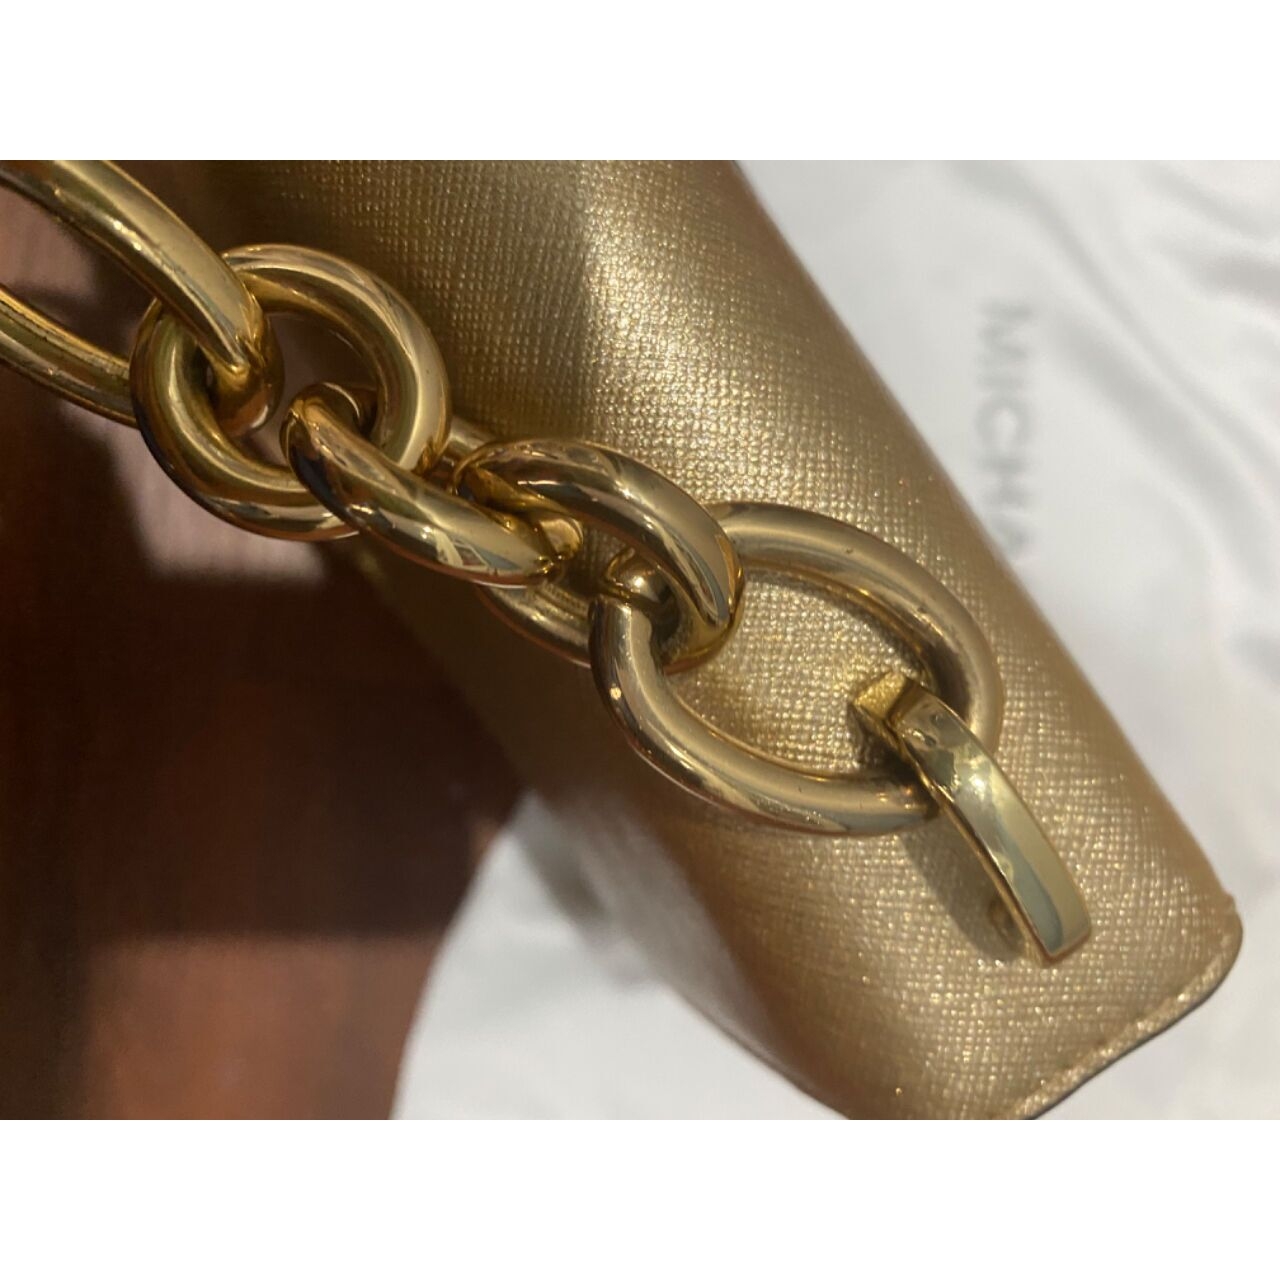 Michael Kors Cynthia Gold Shoulder Bag